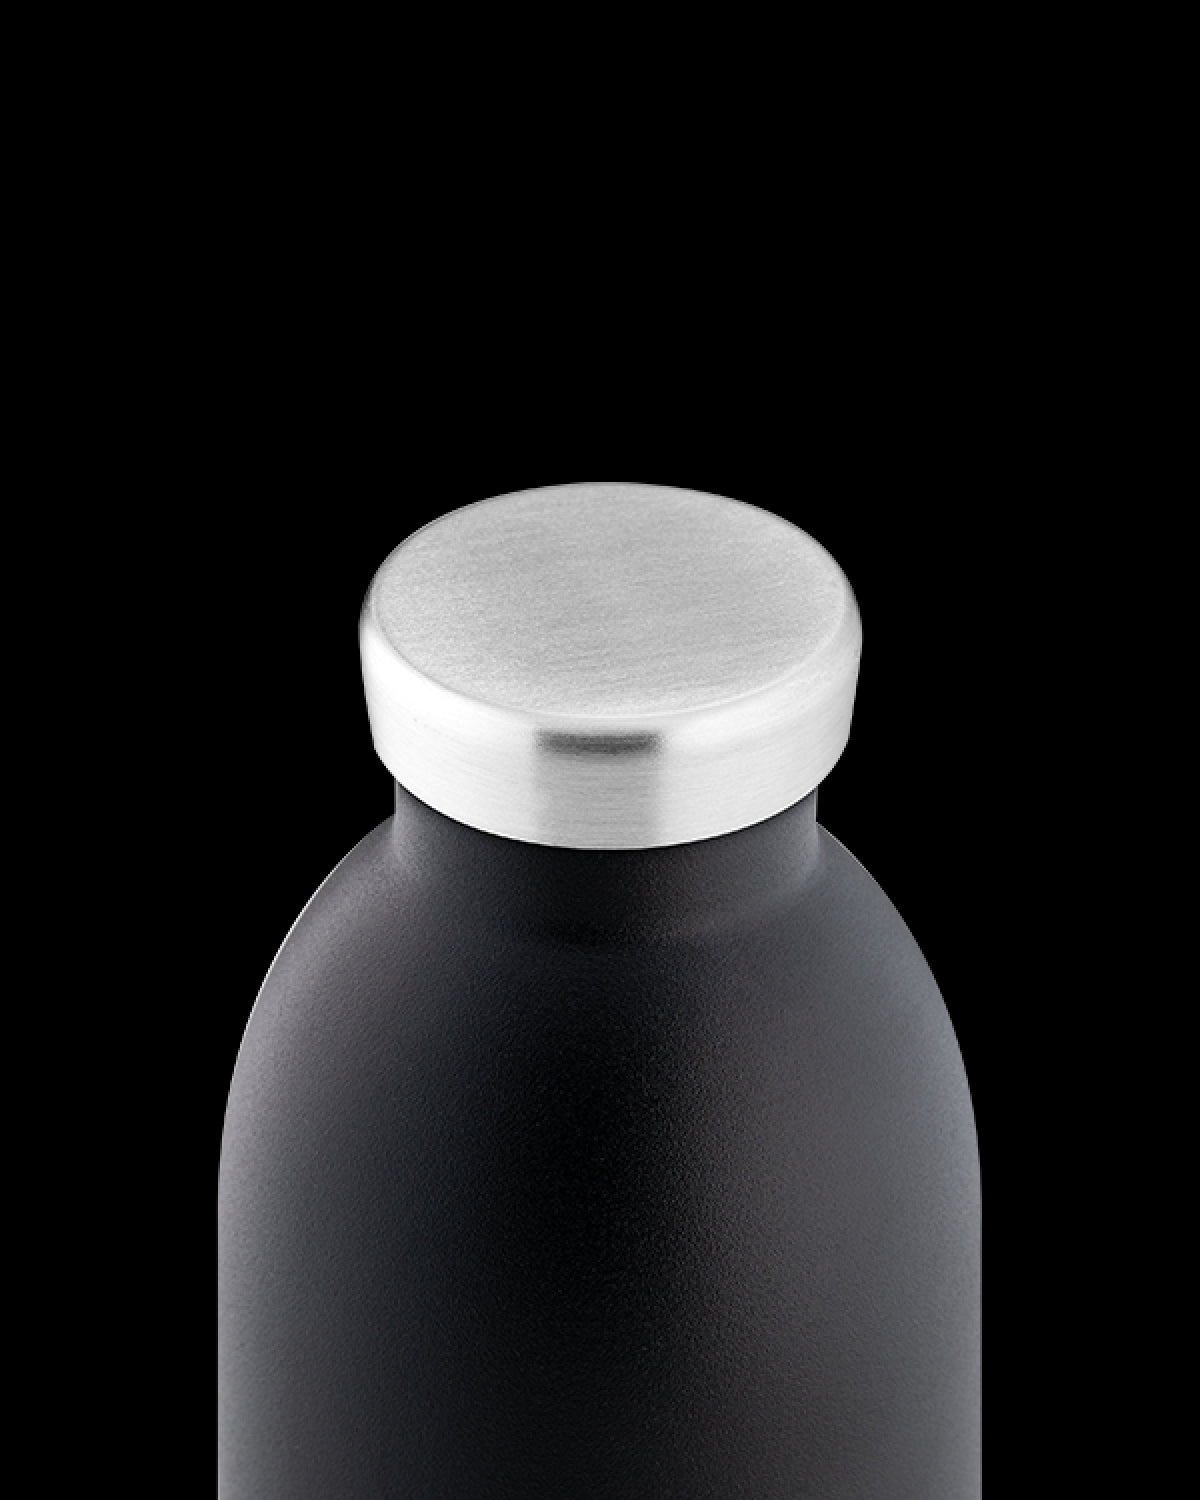 24Bottles Trinkflasche Clima 850ml - Tuxedo Black